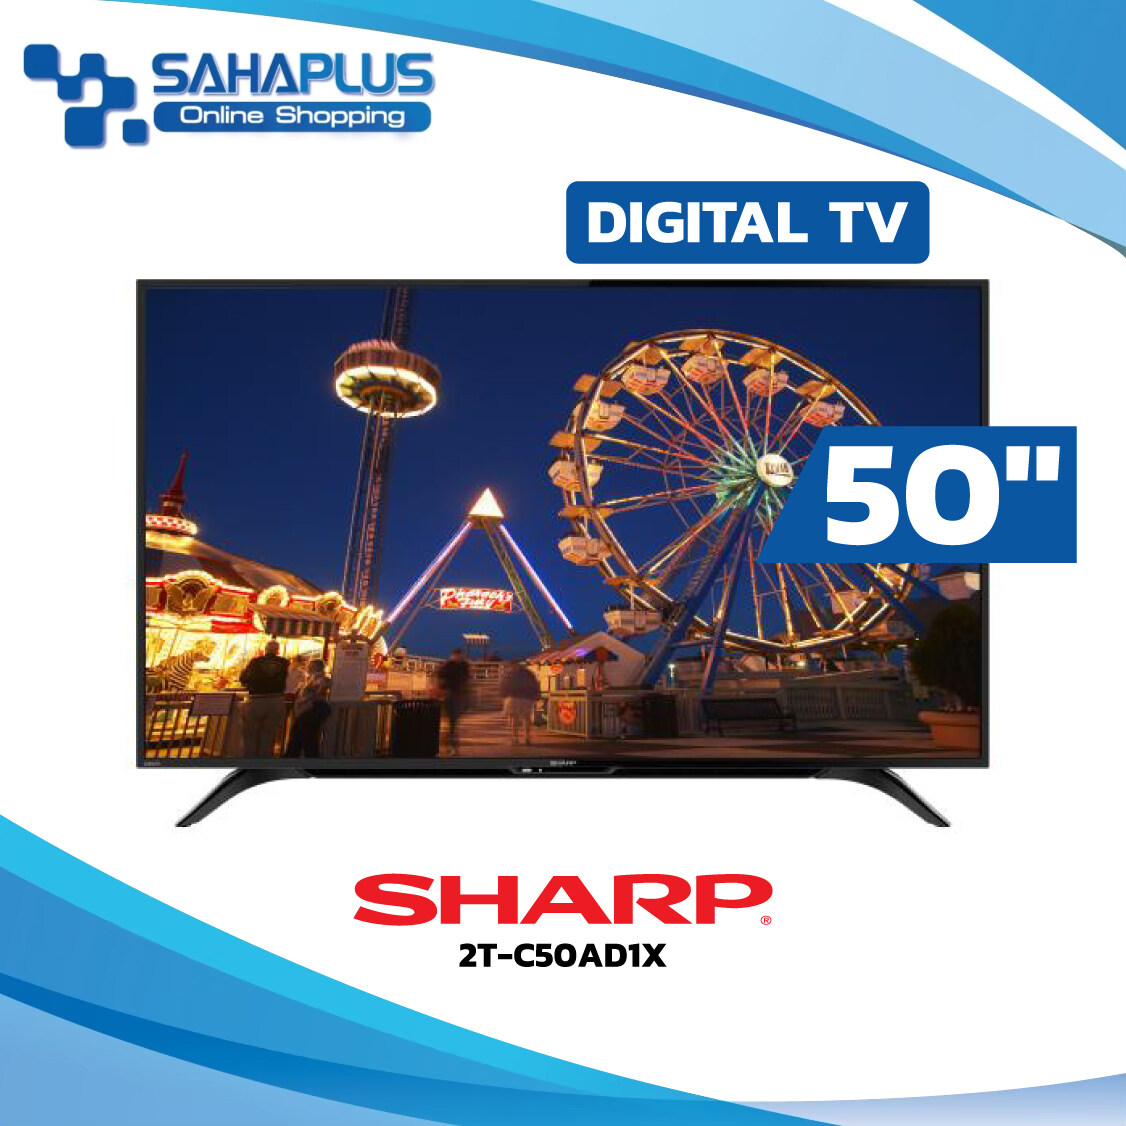 DIGITAL TV Full HD SHARP ทีวี 50 นิ้ว รุ่น 2T-C50AD1X (รับประกันศูนย์ 1 ปี)